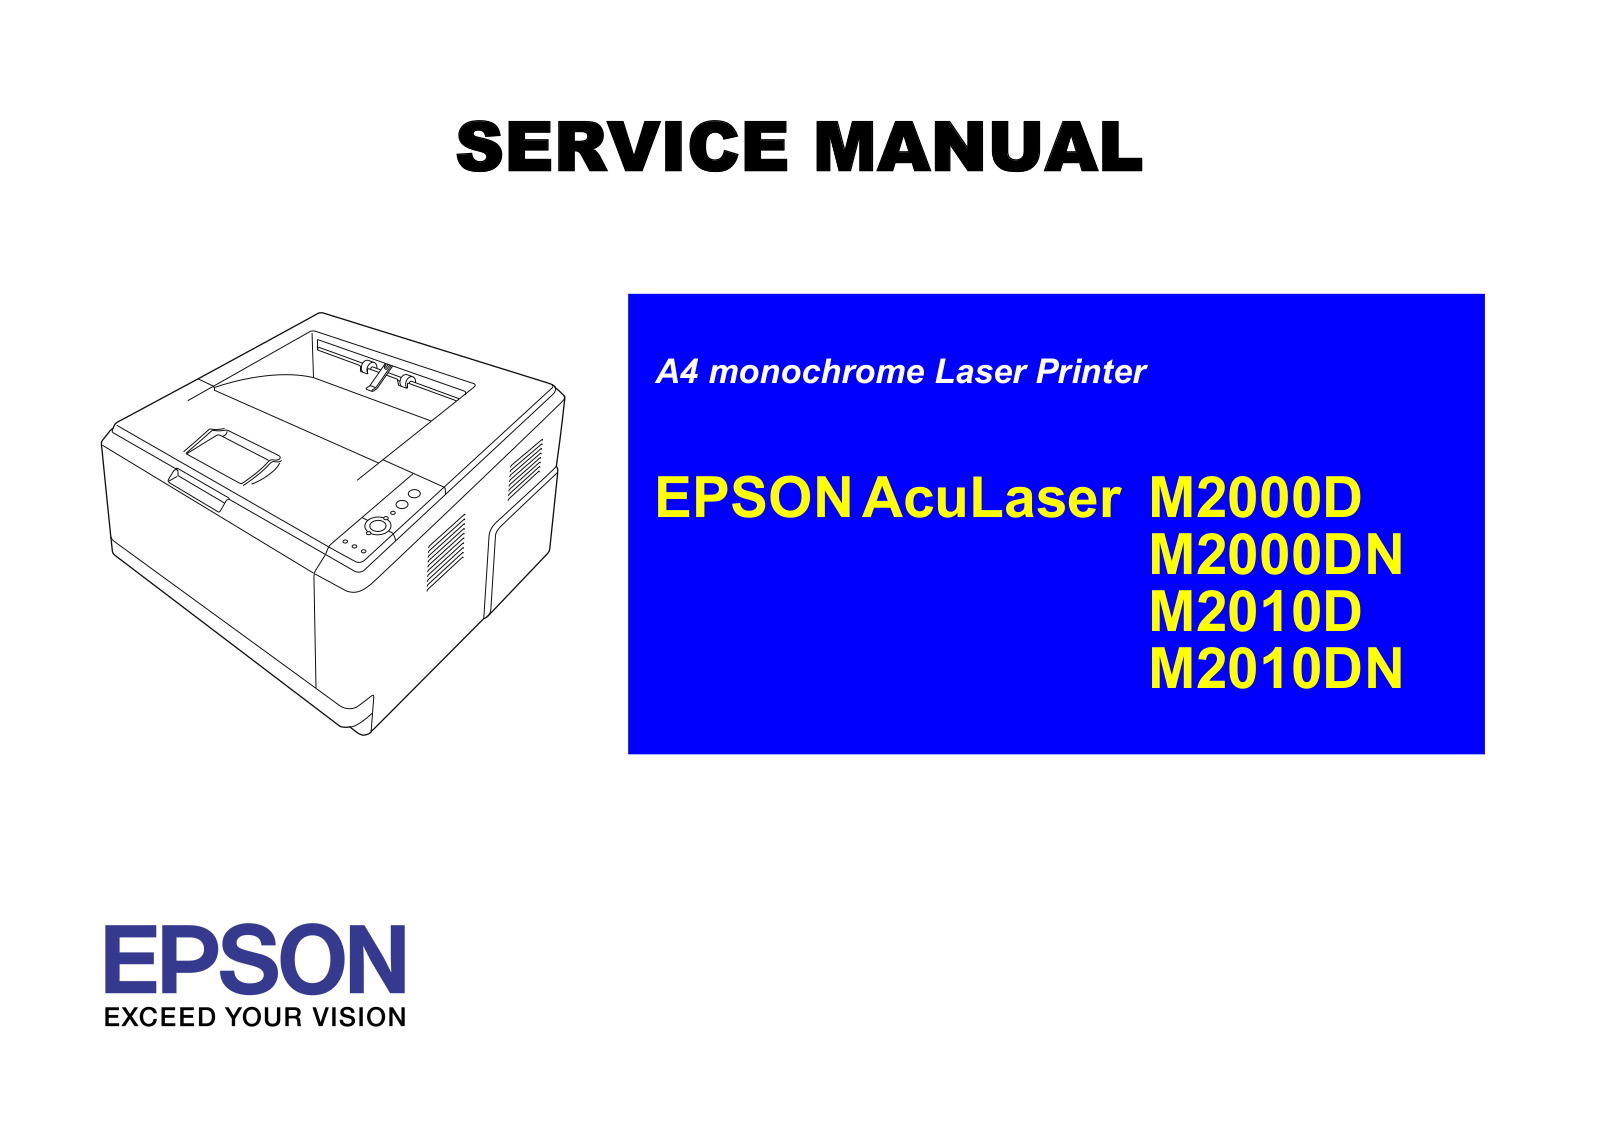 Epson AcuLaser M2000, AcuLaser M2010 Service Manual